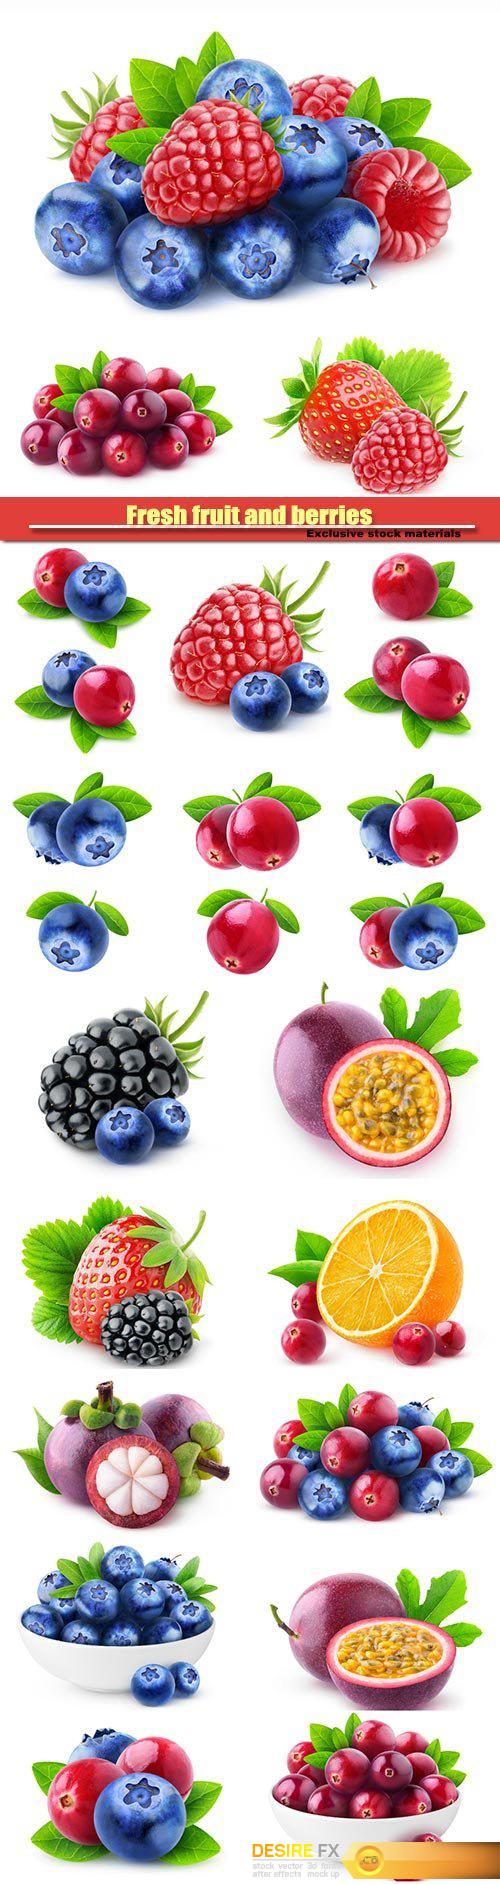 Fresh fruit and berries, blueberries and raspberries